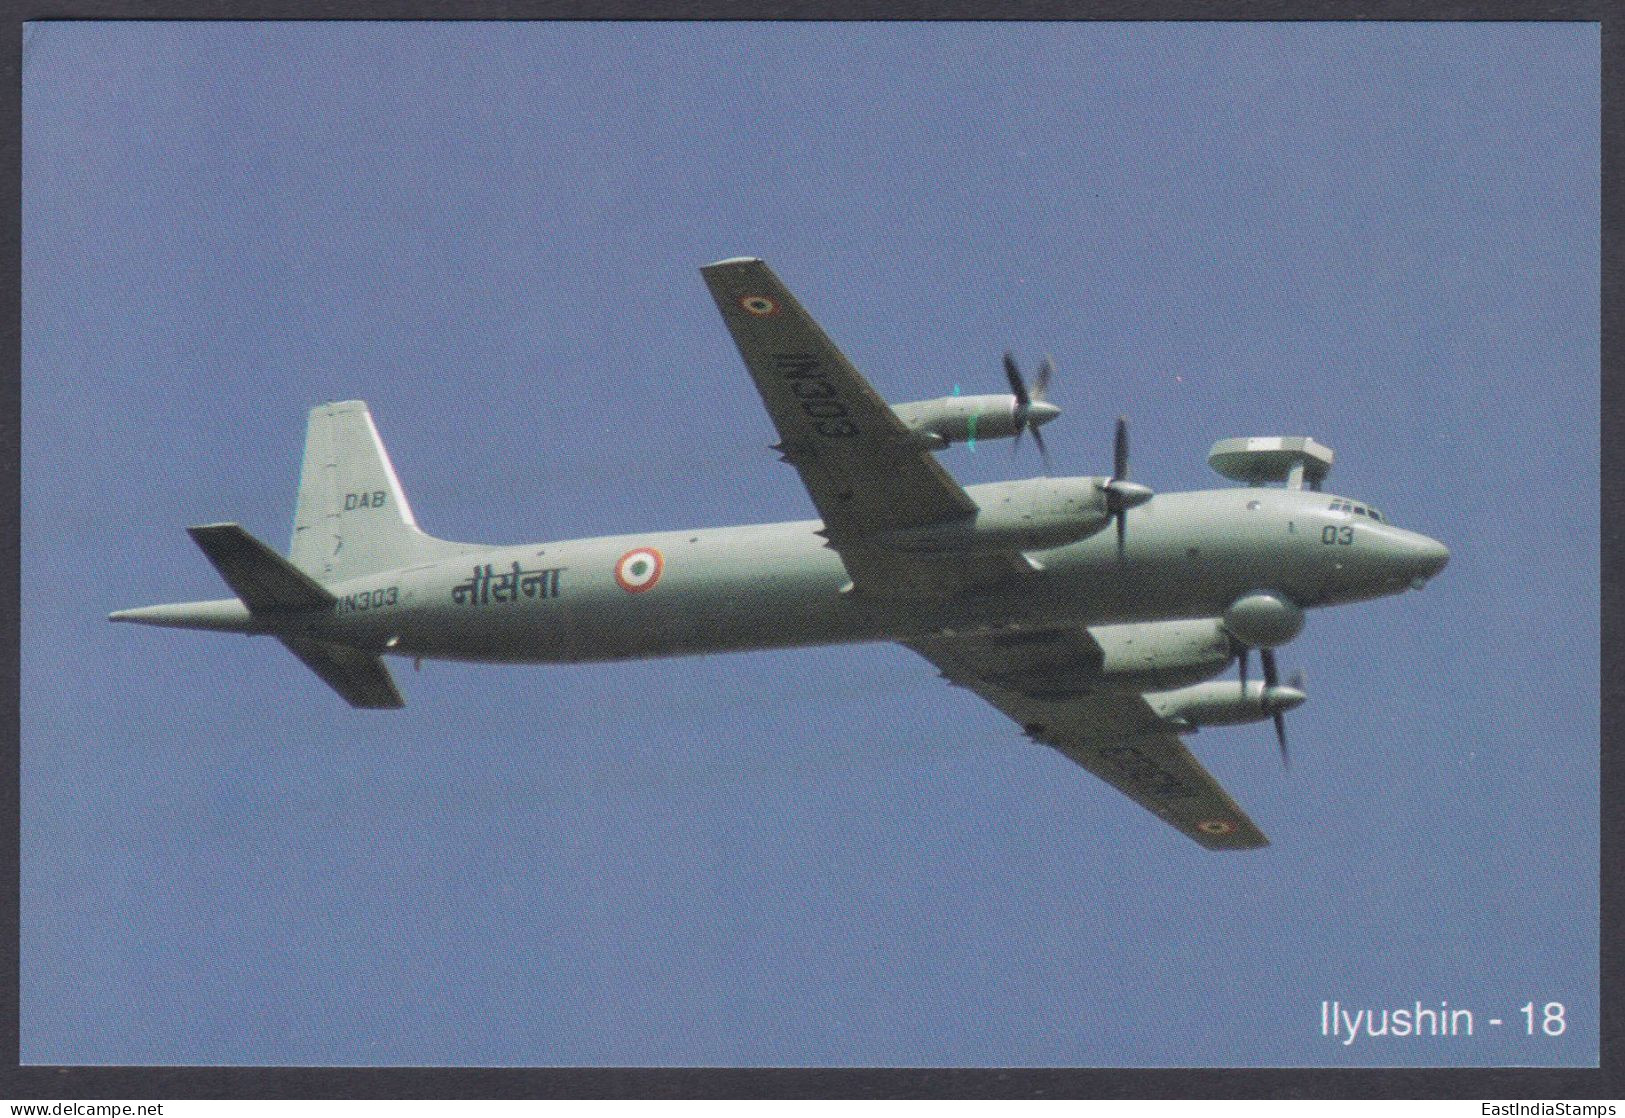 Inde India 2007 Mint Postcard Bangalore Air Show Ilyushin - 18, Indian Navy, Naval, Aircraft, Aeroplane, Airplane - Indien